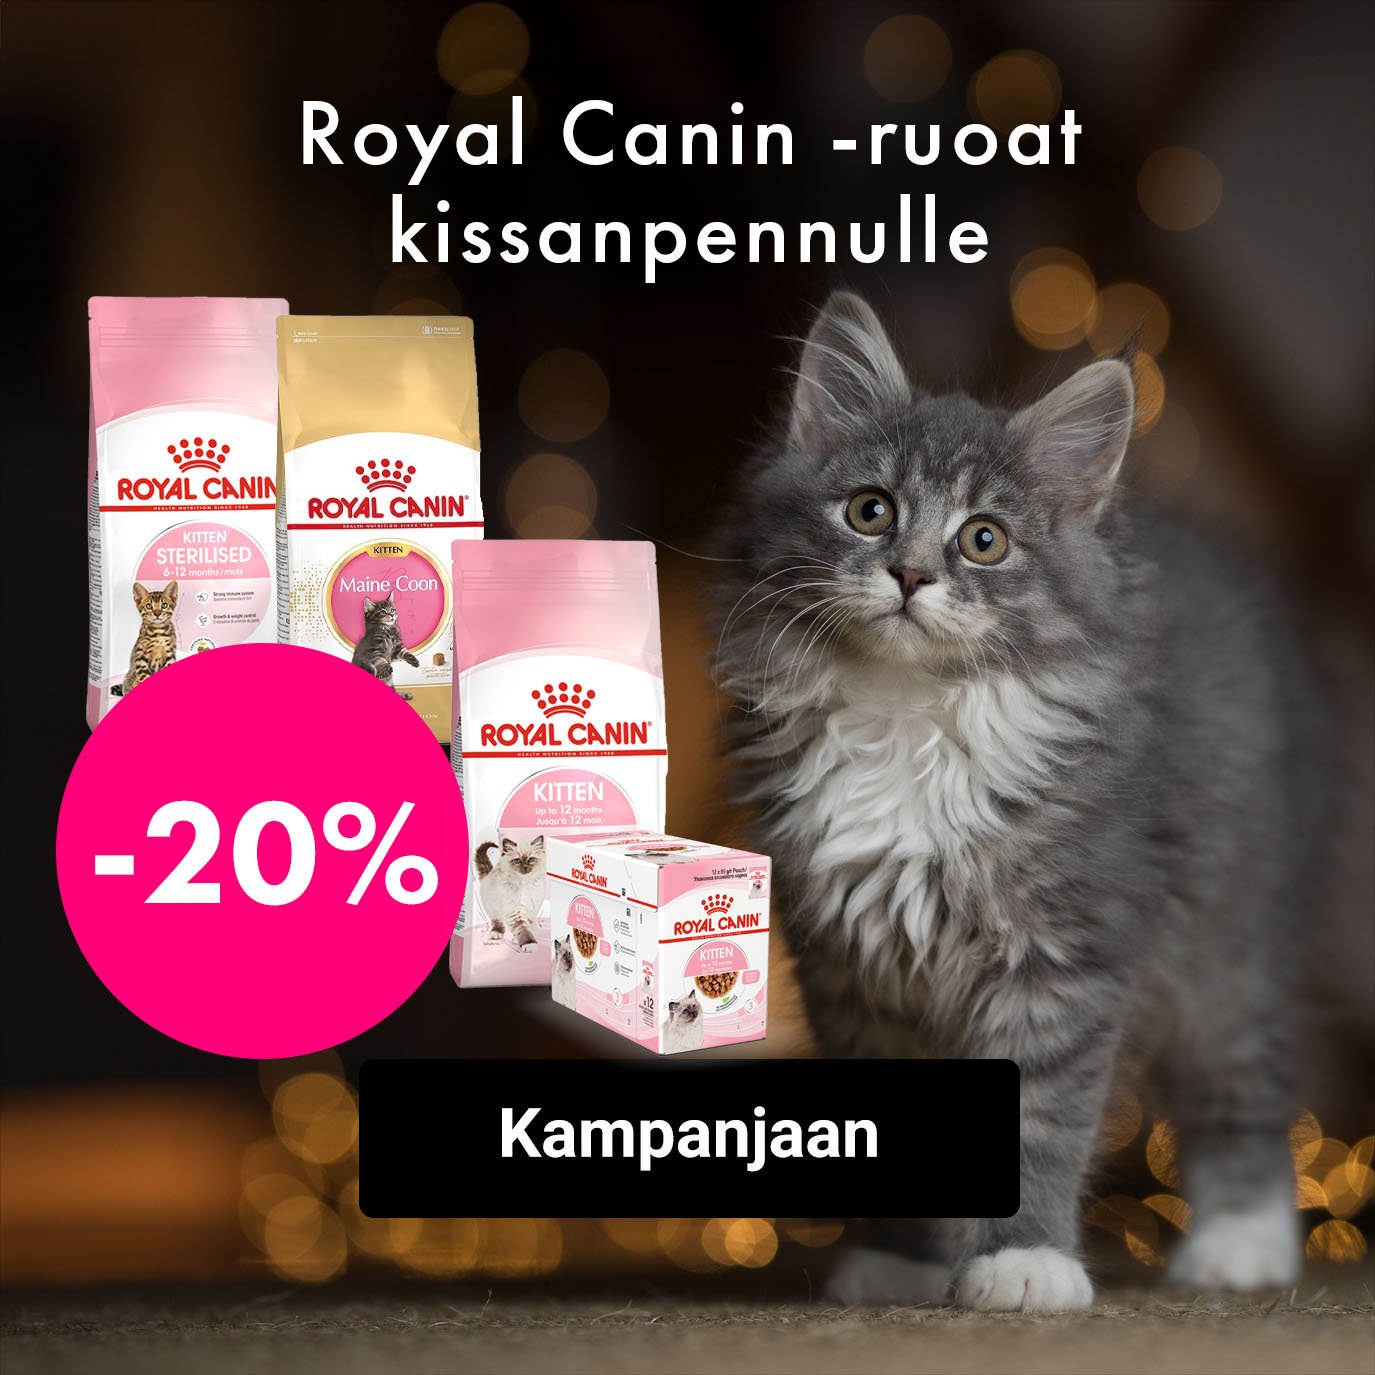 Royal Canin kissanpennulle -20%